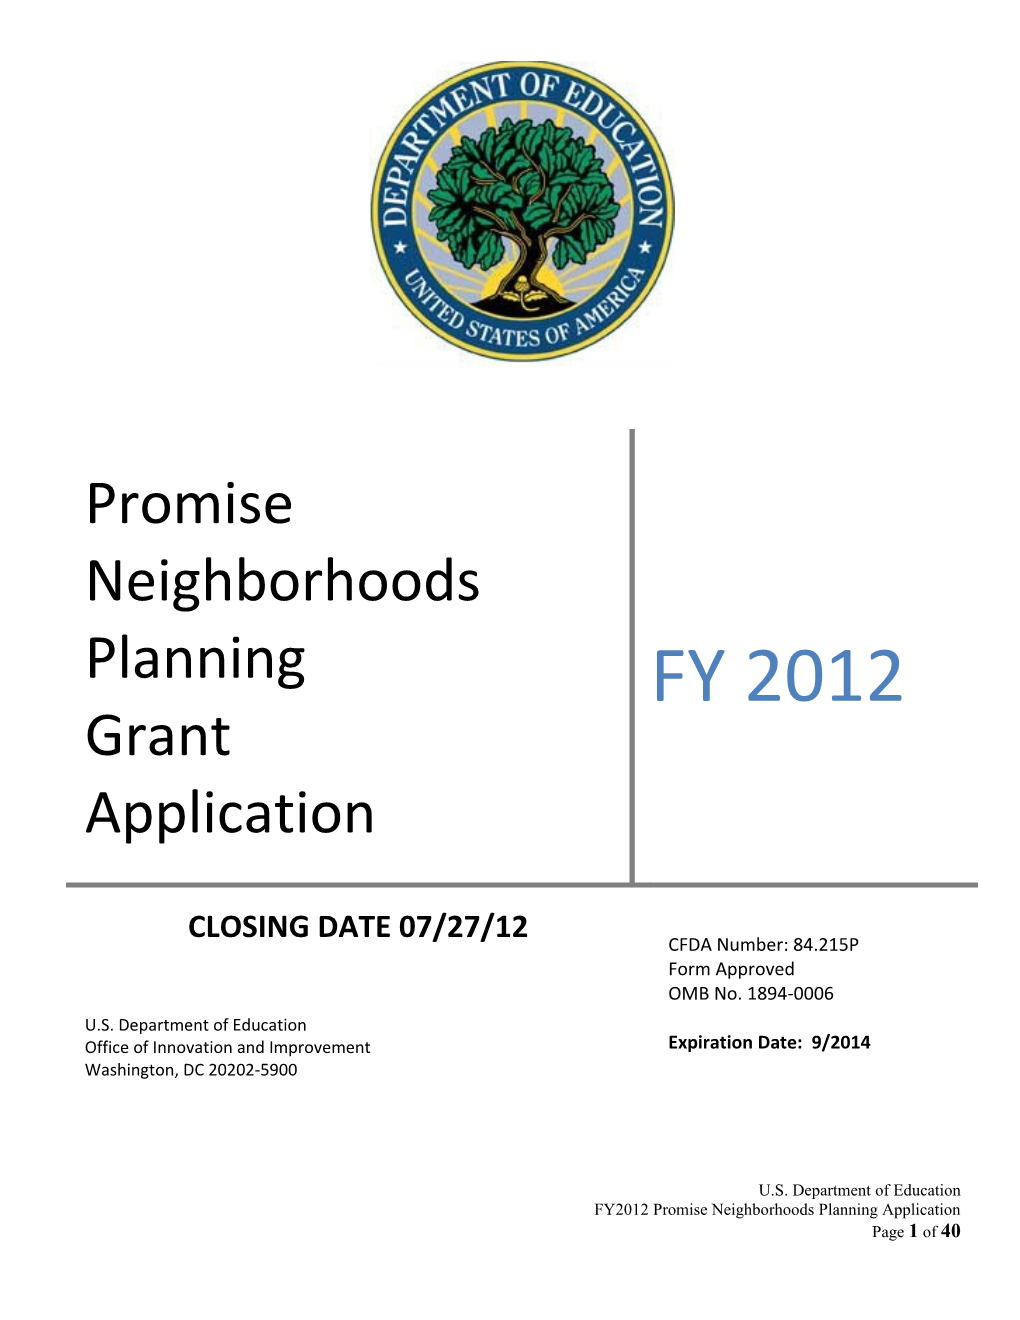 Promise Neighborhoods Grant Application (MS Word)